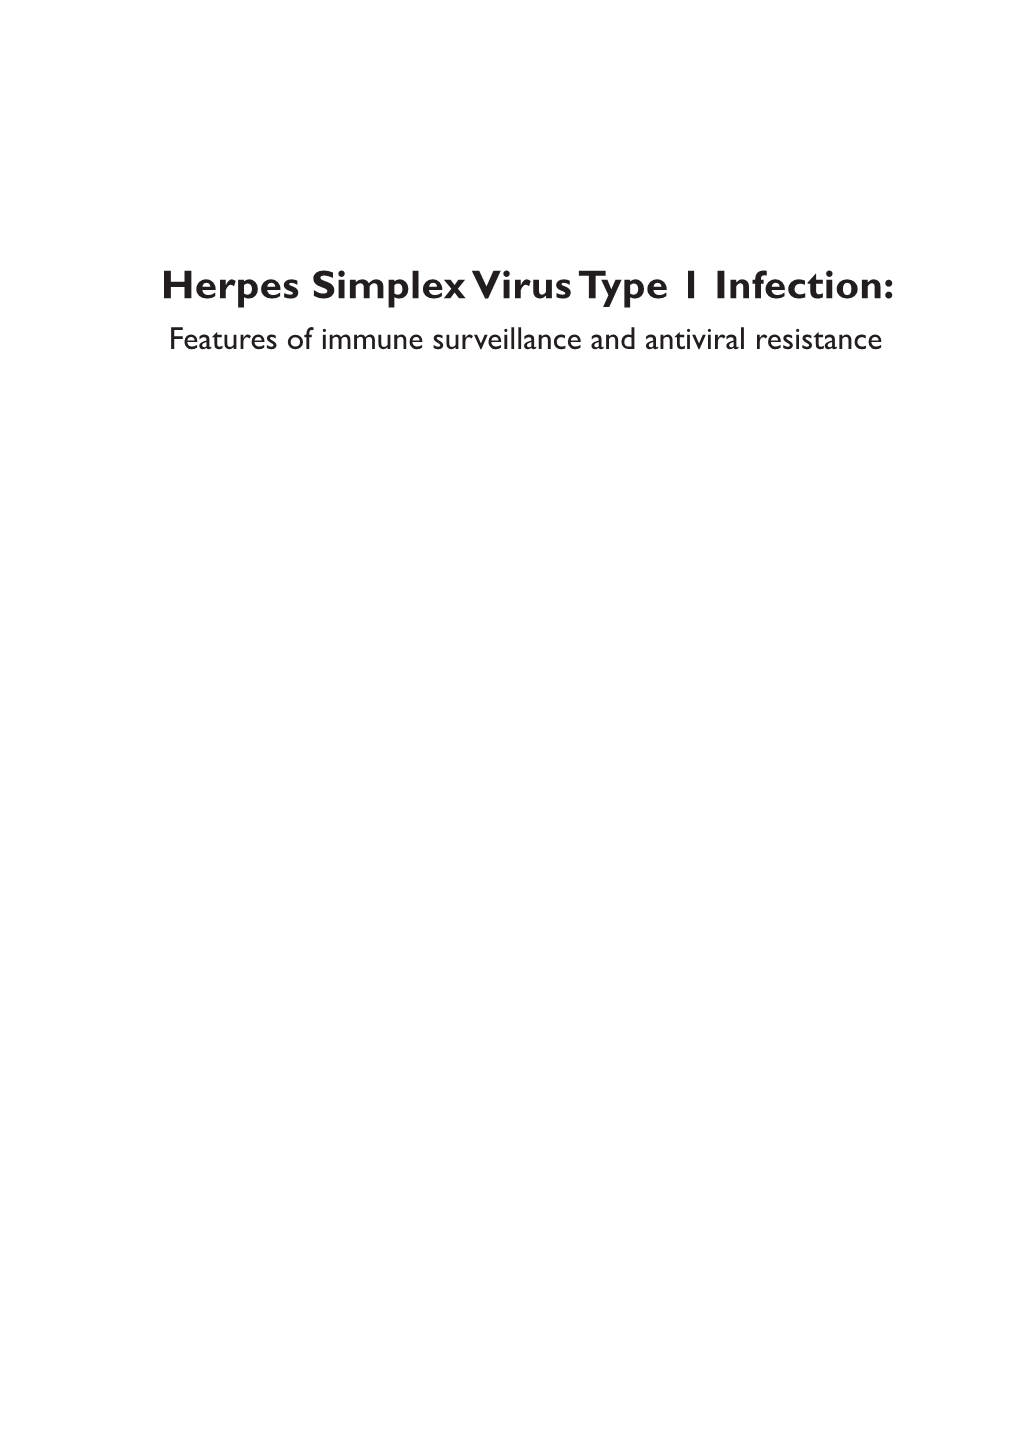 Herpes Simplex Virus Type 1 Infection